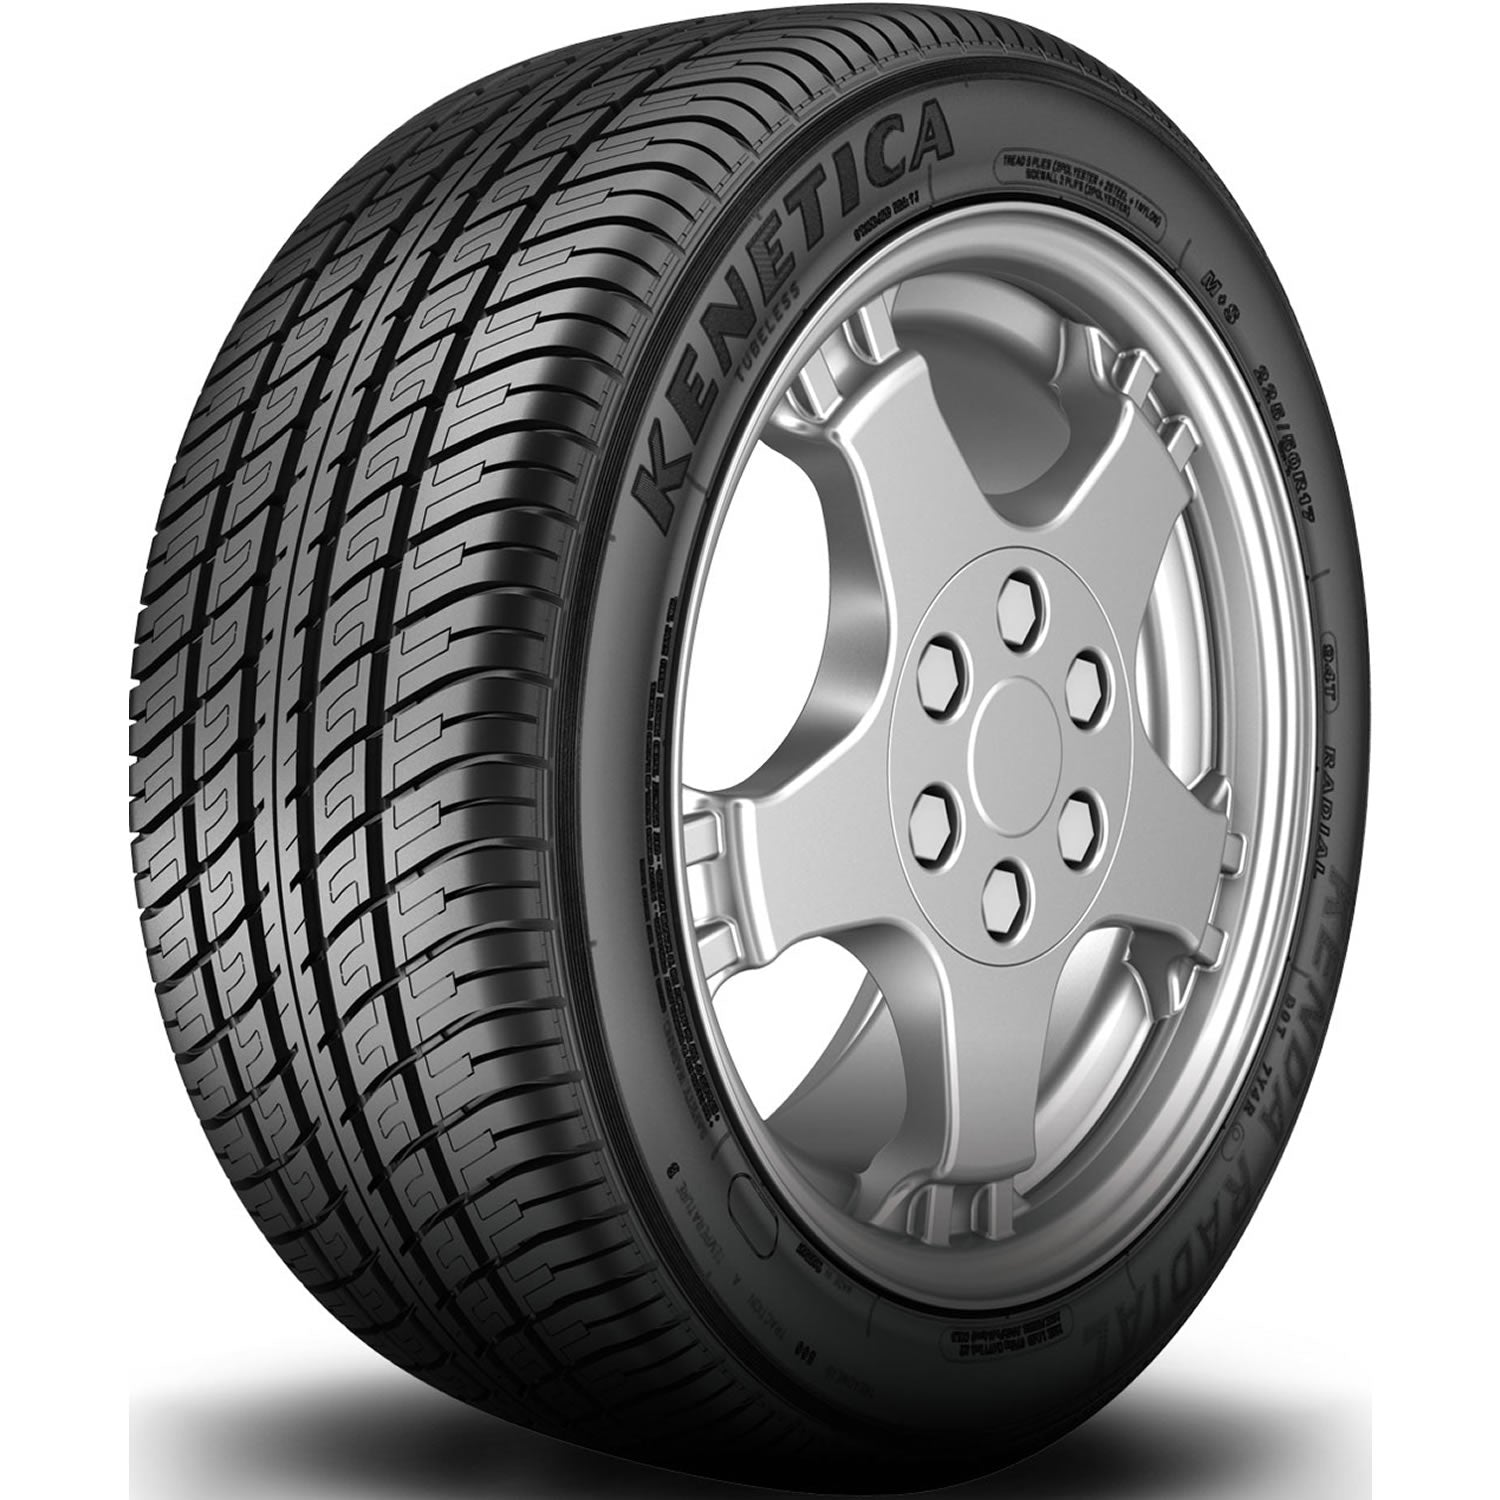 KENDA KENETICA 205/55R16 (24.8X9.1R 16) Tires